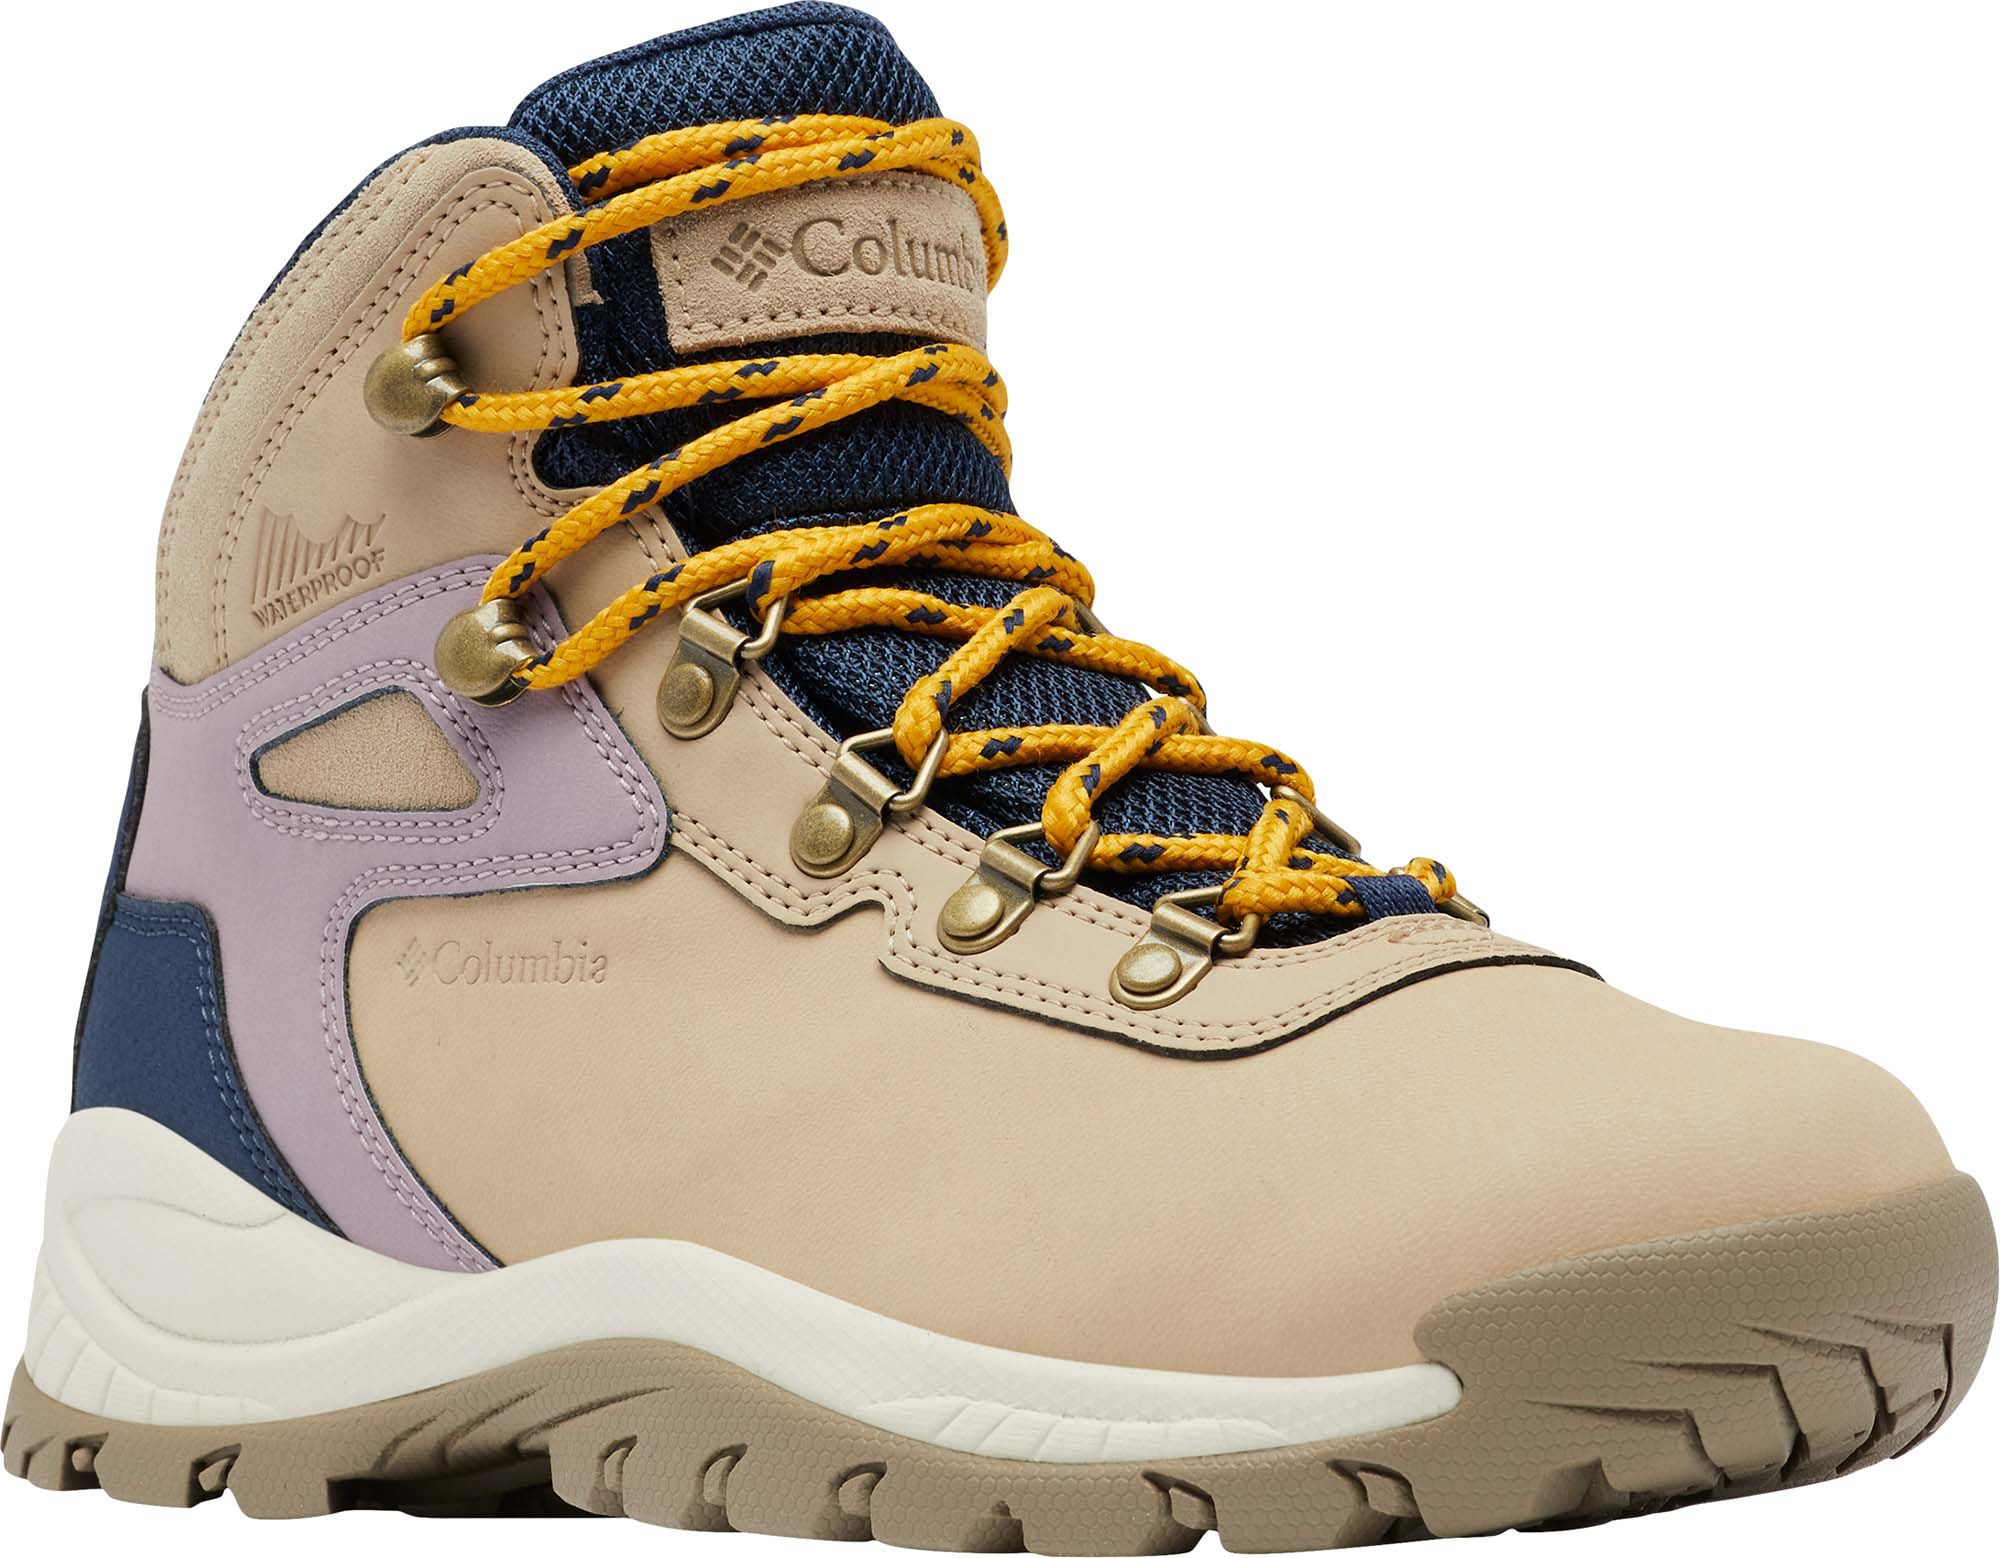 Photos - Trekking Shoes Columbia Women's Newton Ridge Plus Mid Waterproof Hiking Boots, Size 6, An 